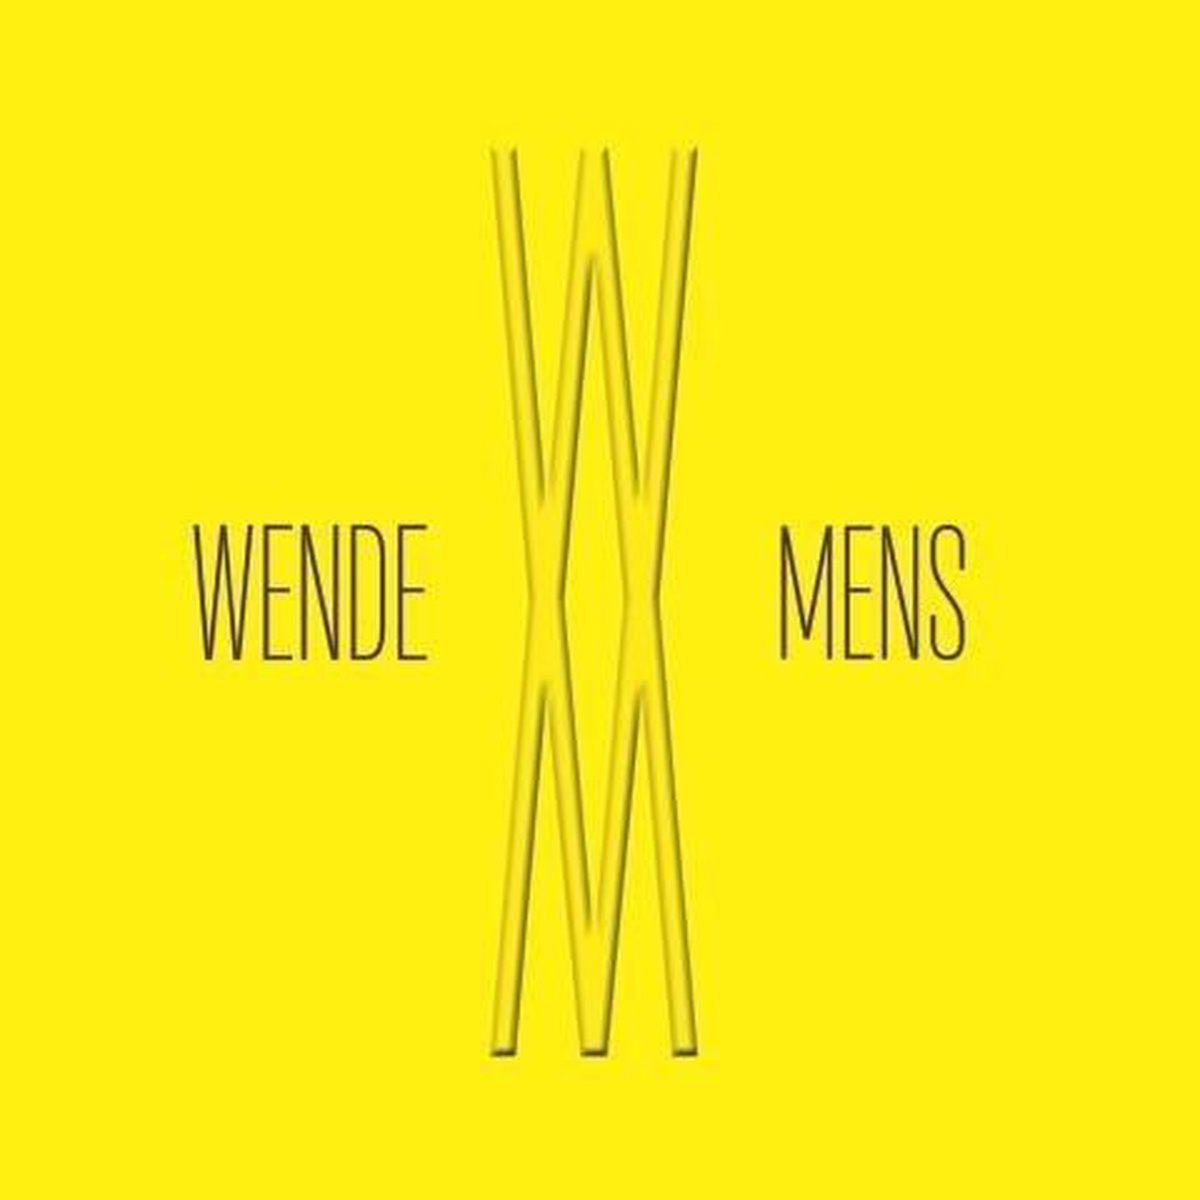 Wende - Mens - Wende